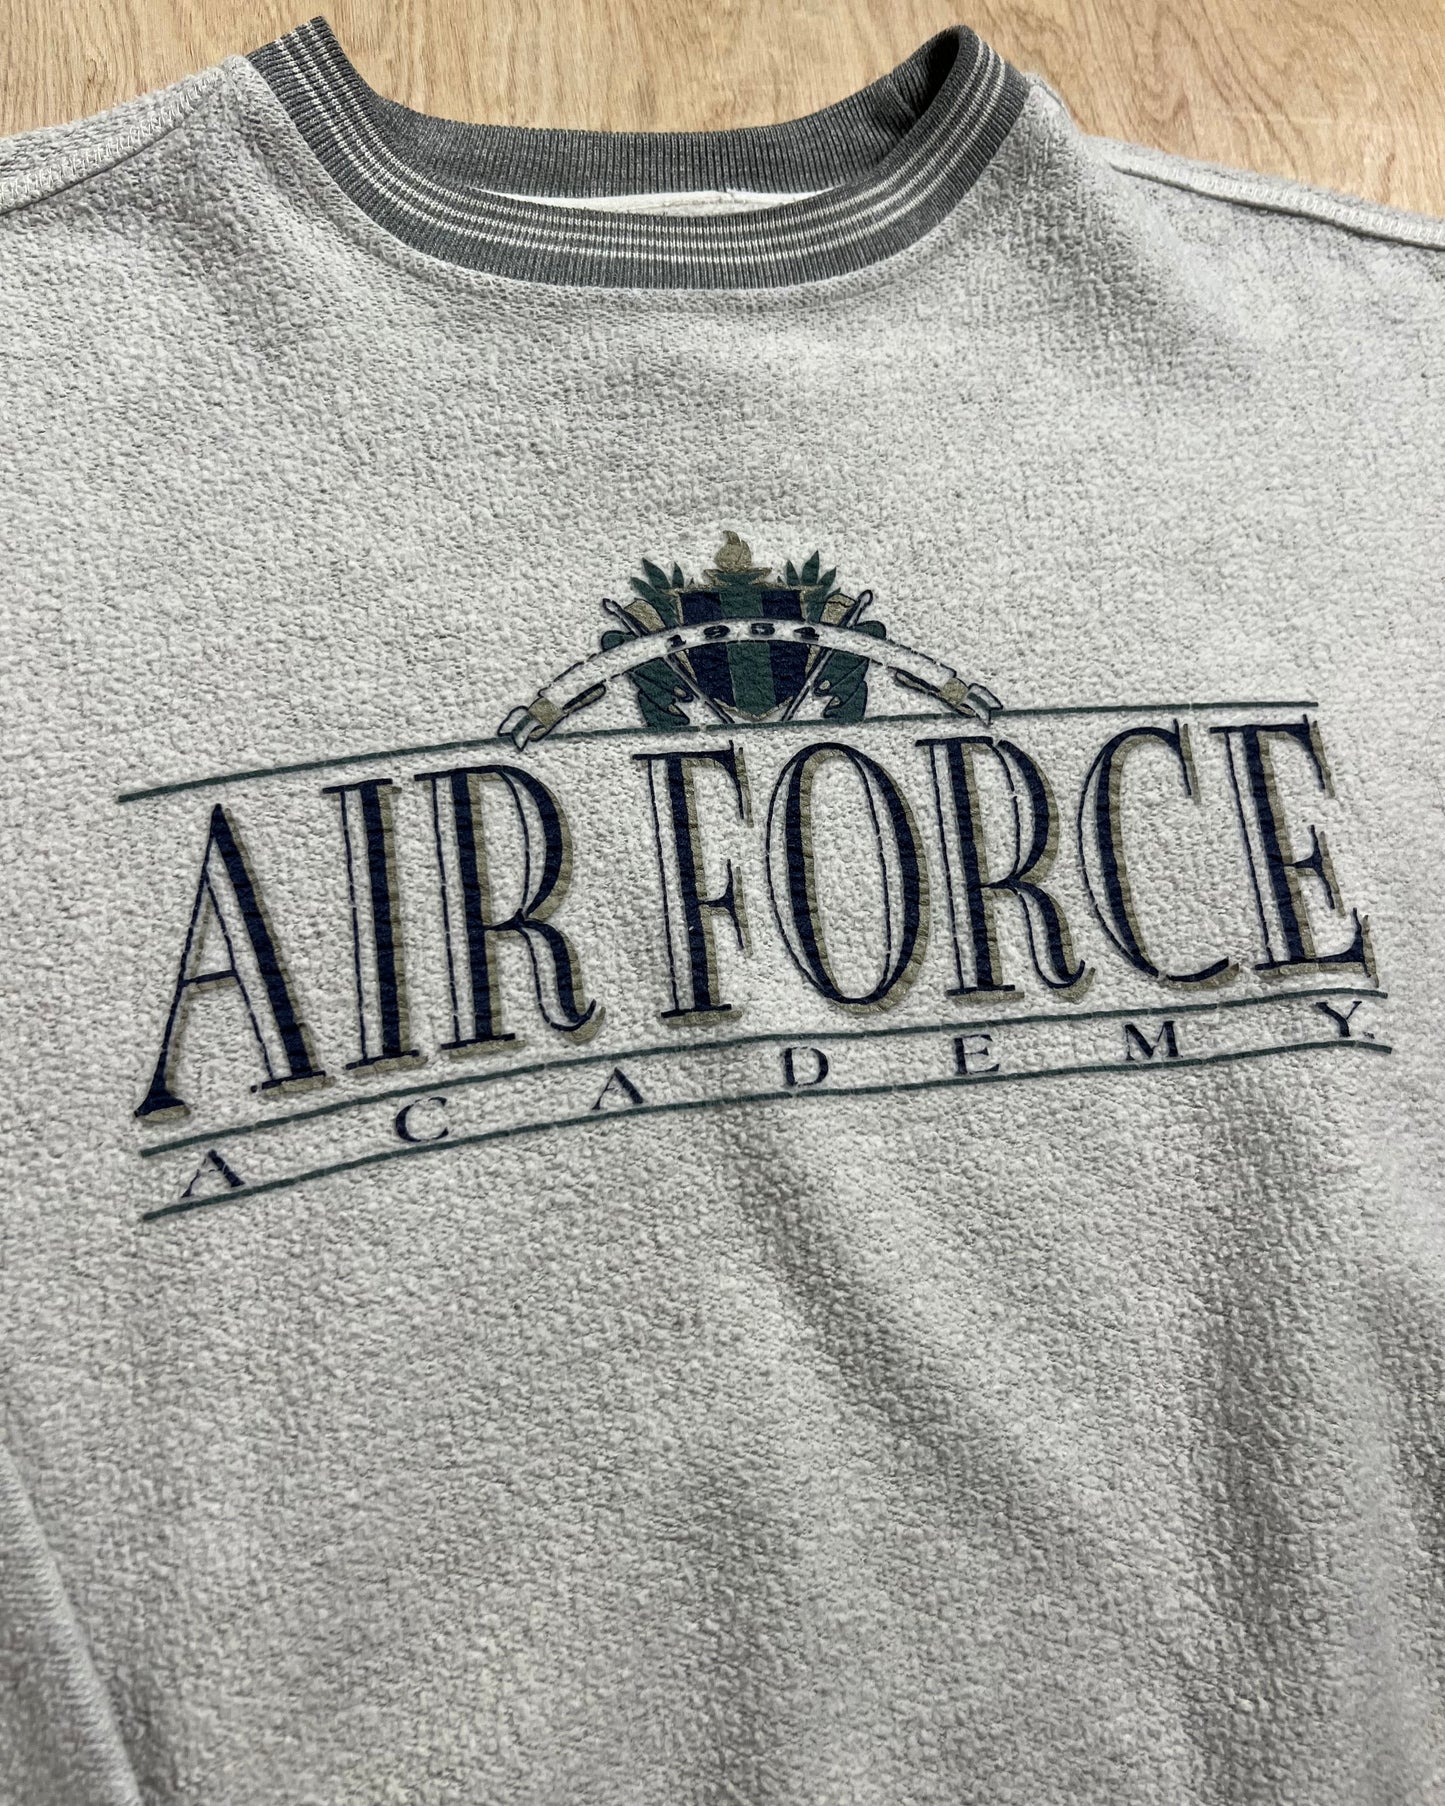 Vintage Air Force Academy Crewneck